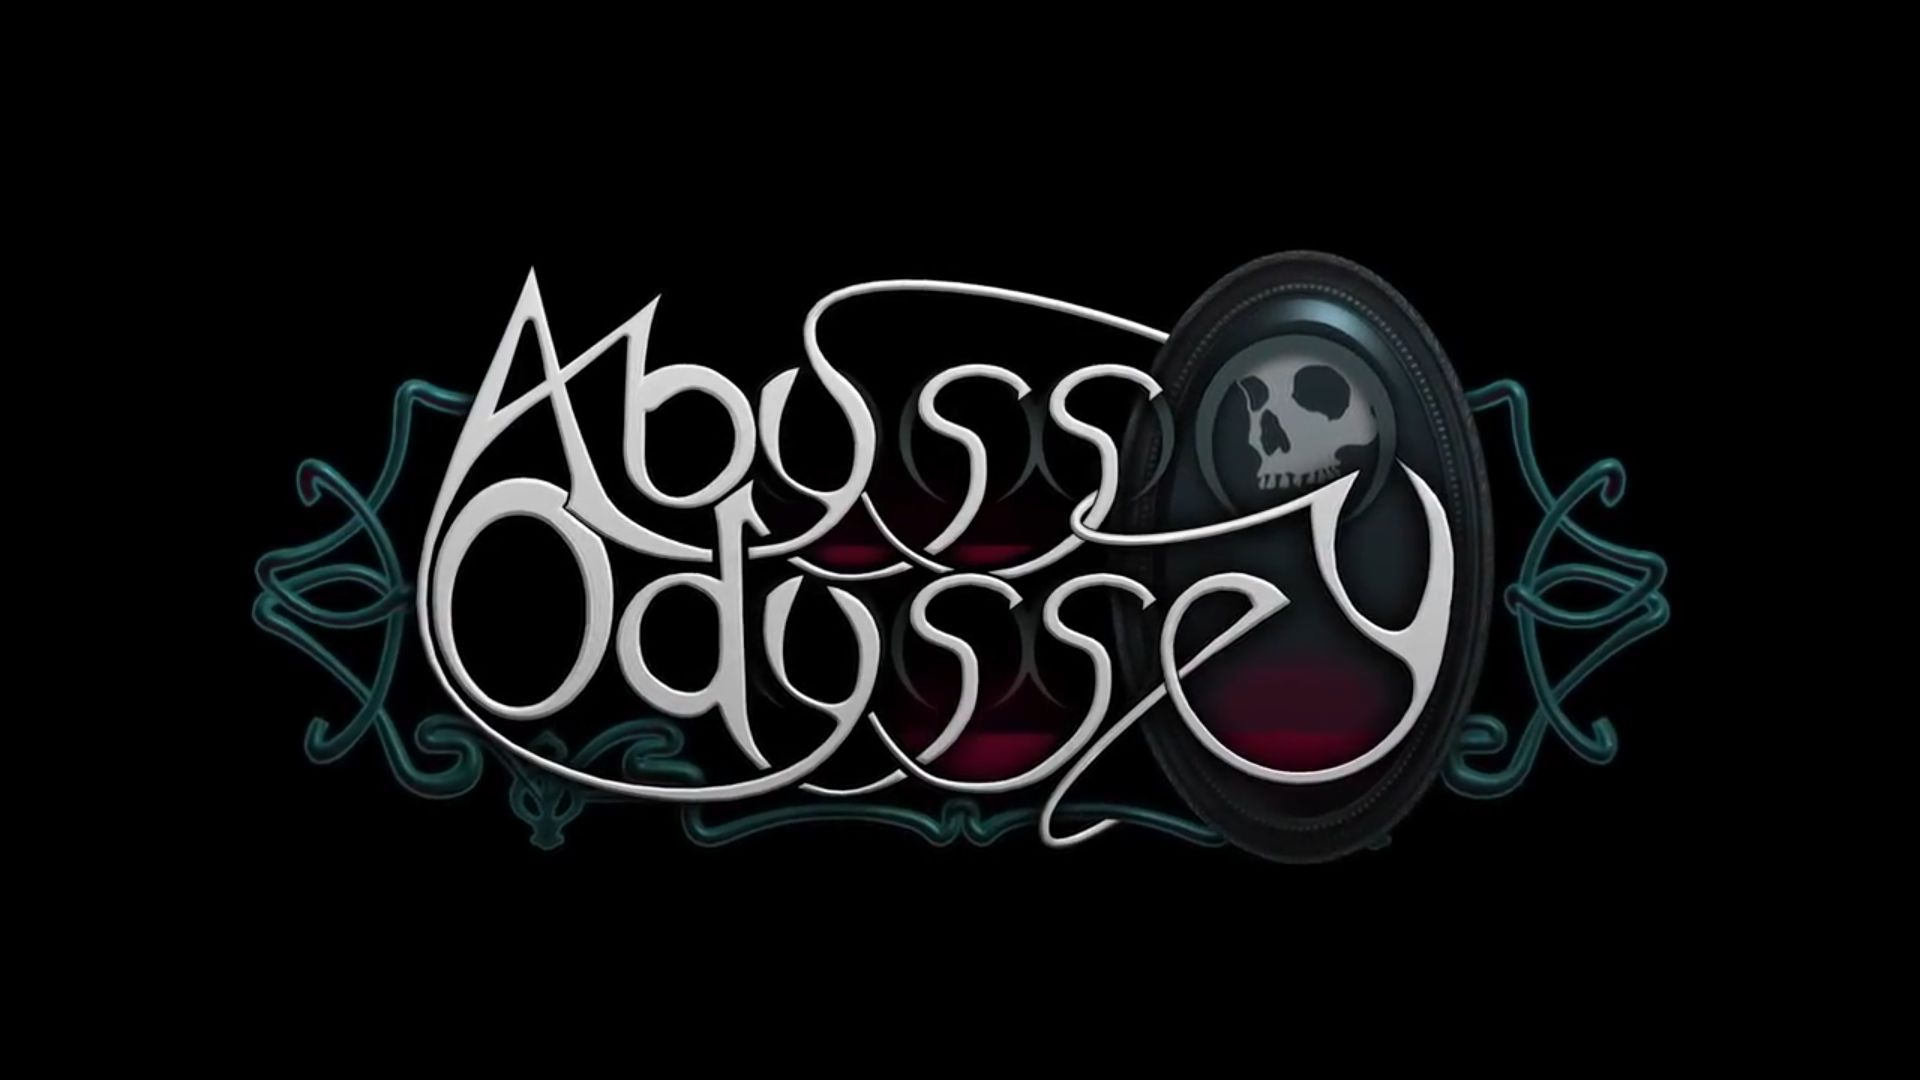 Abyss Odyssey HD wallpapers, Desktop wallpaper - most viewed